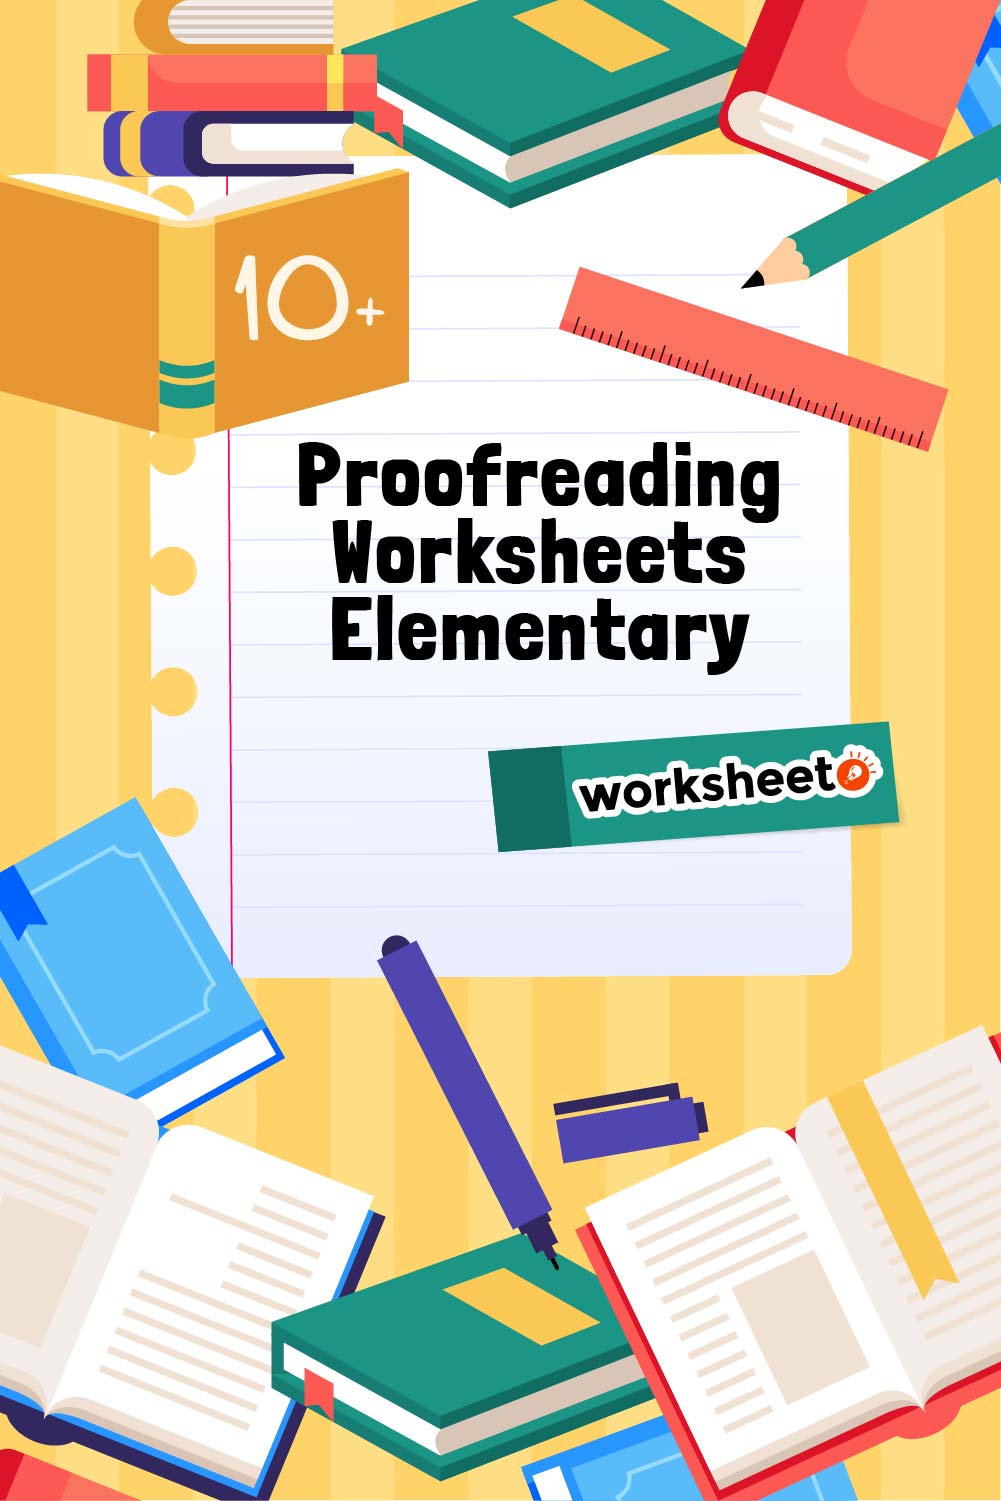 Proofreading Worksheets Elementary